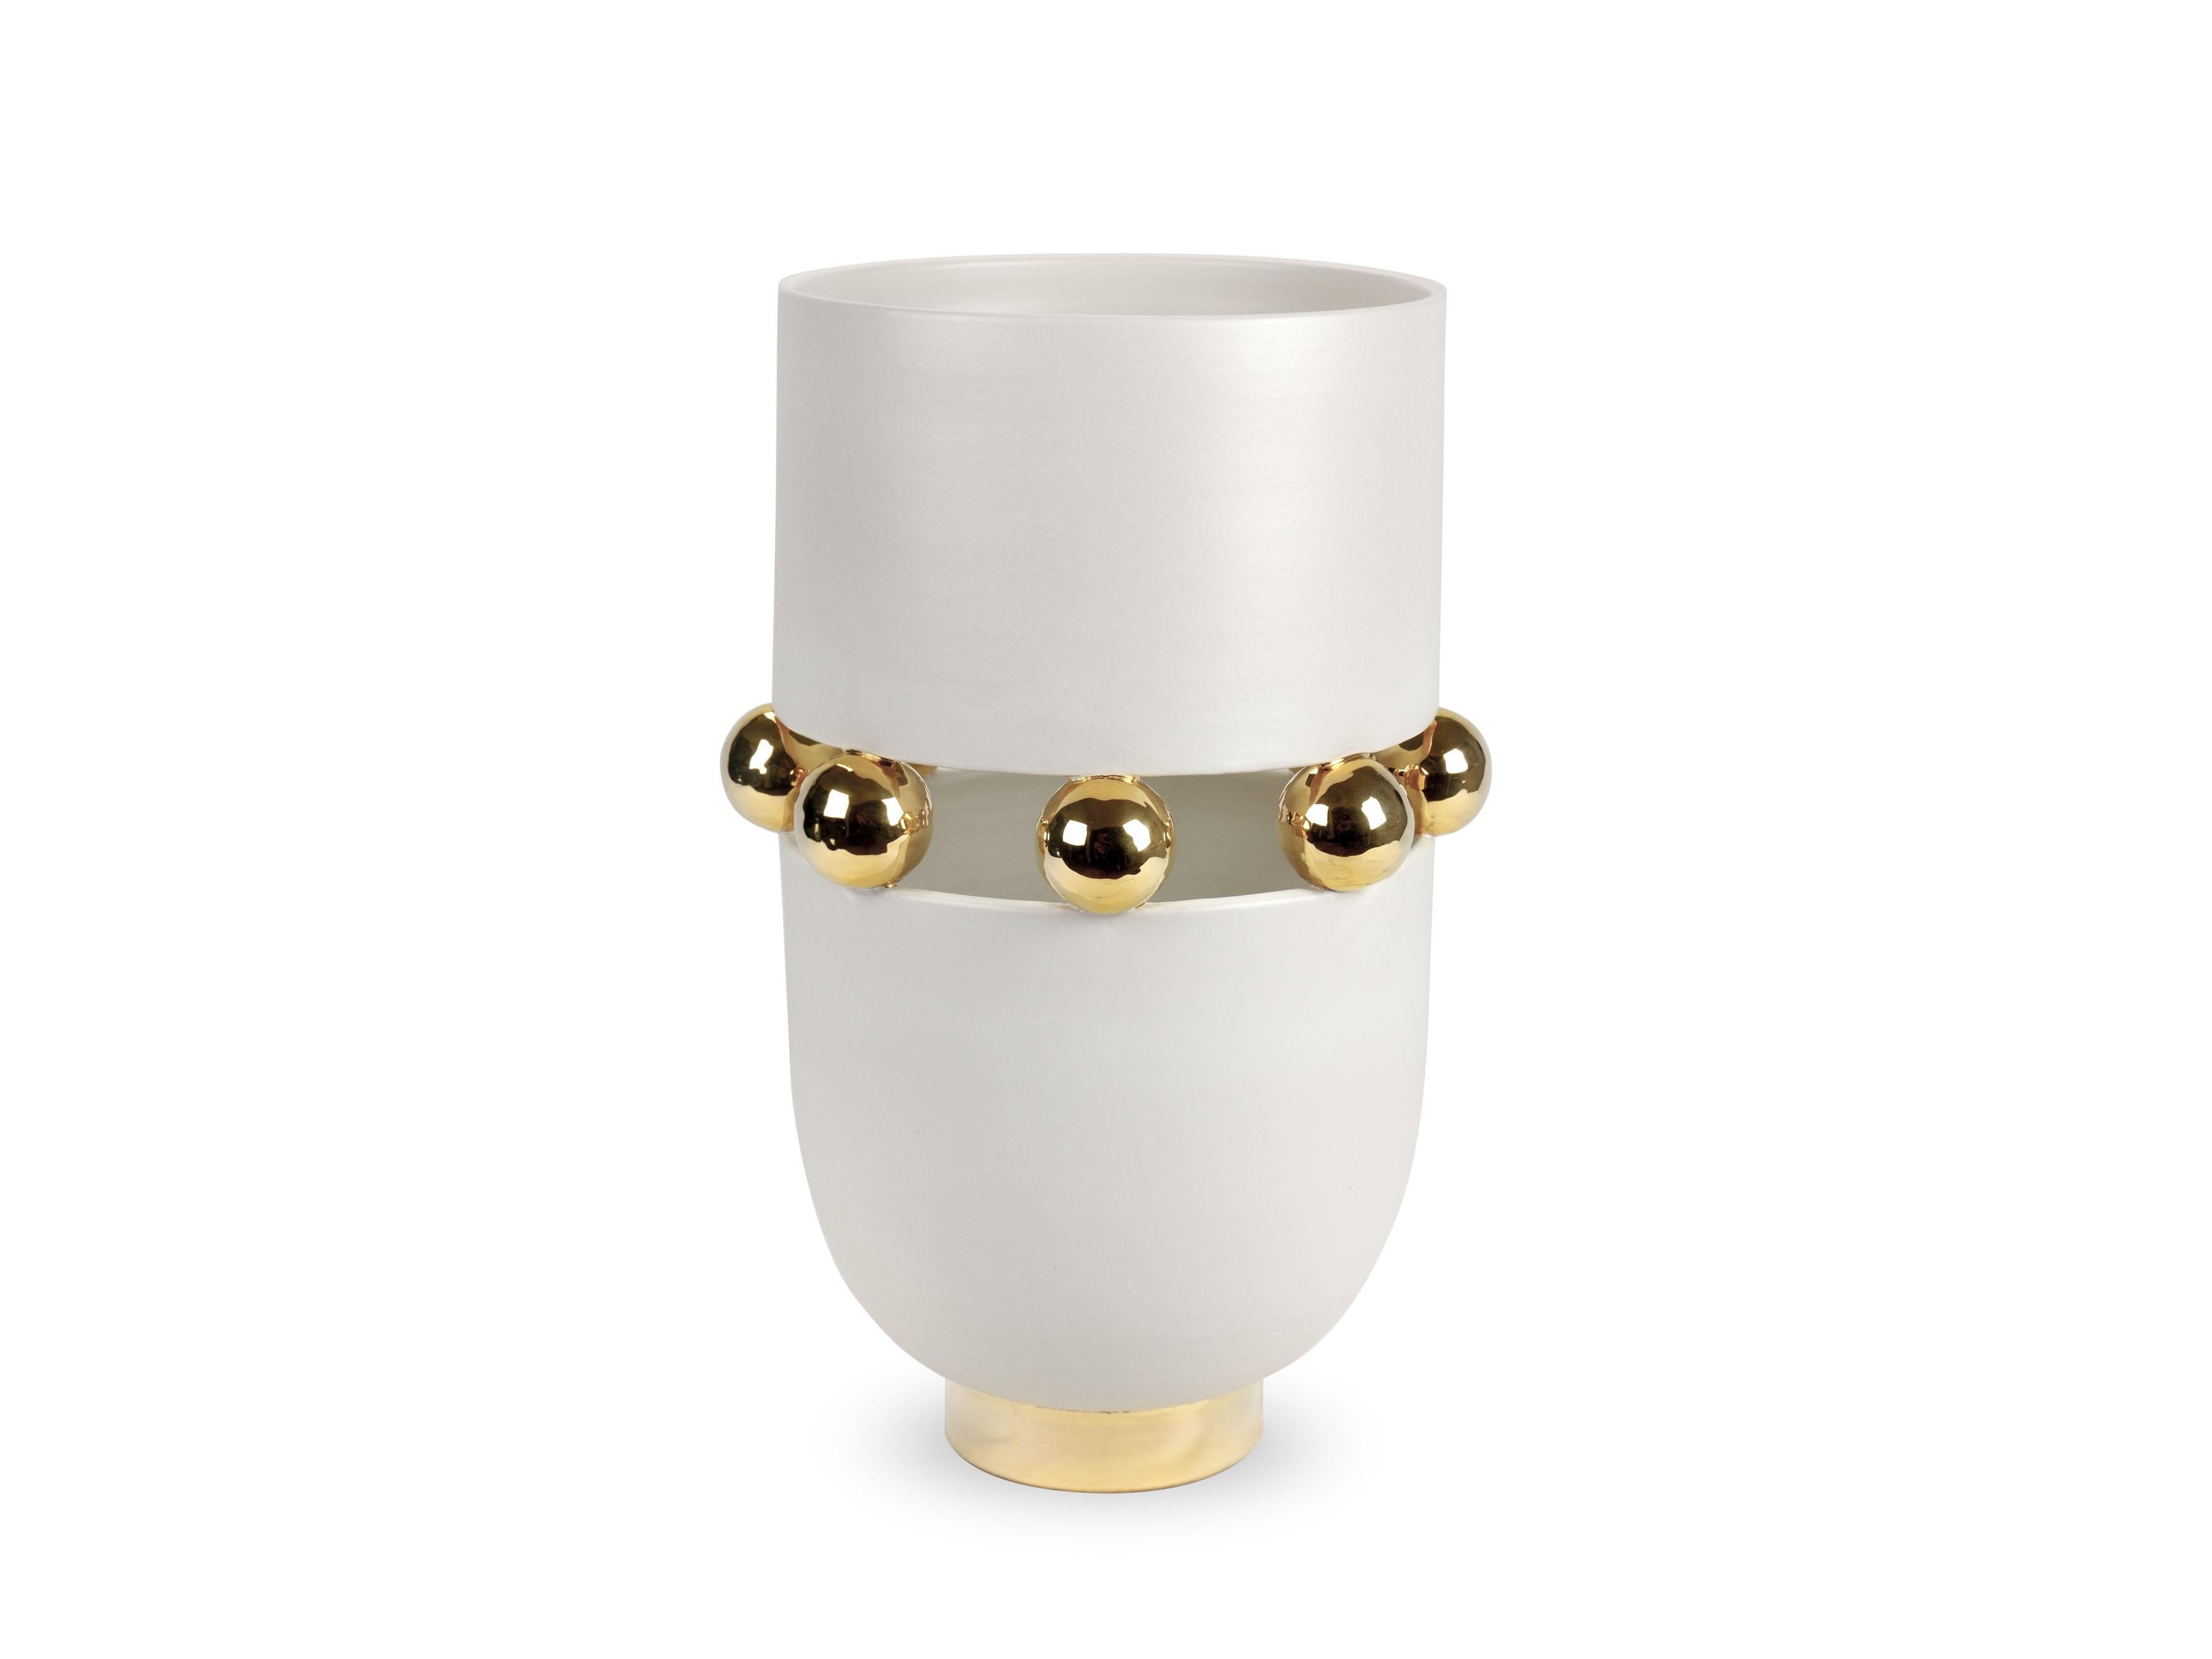 Hand-Painted Modern Vase, Matte Finish Warm White, Spheres 24kt Gold Luster, Handmade Italy For Sale